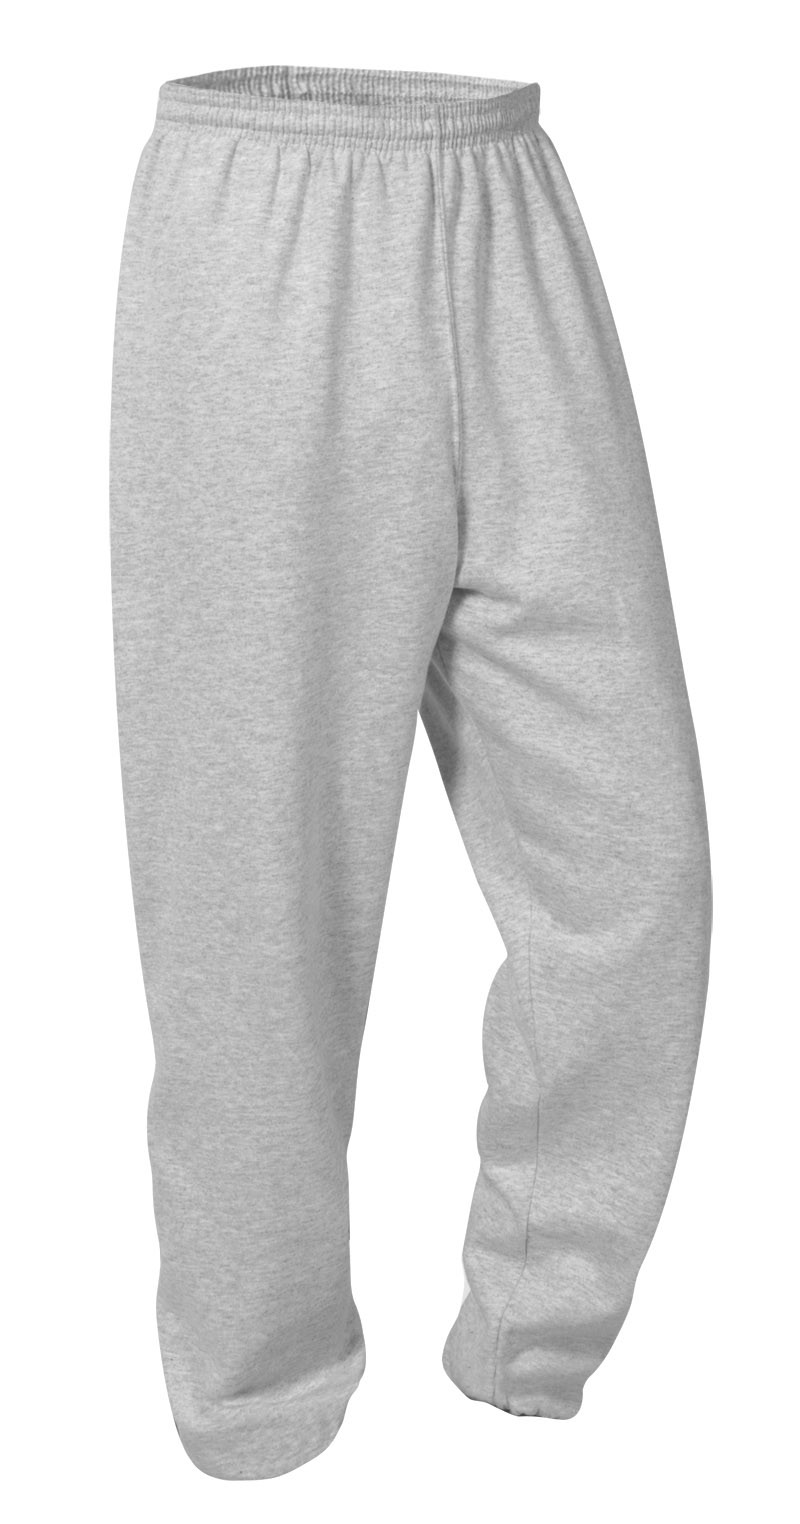 SHGS Grey Gym Sweatpants w/ School Logo